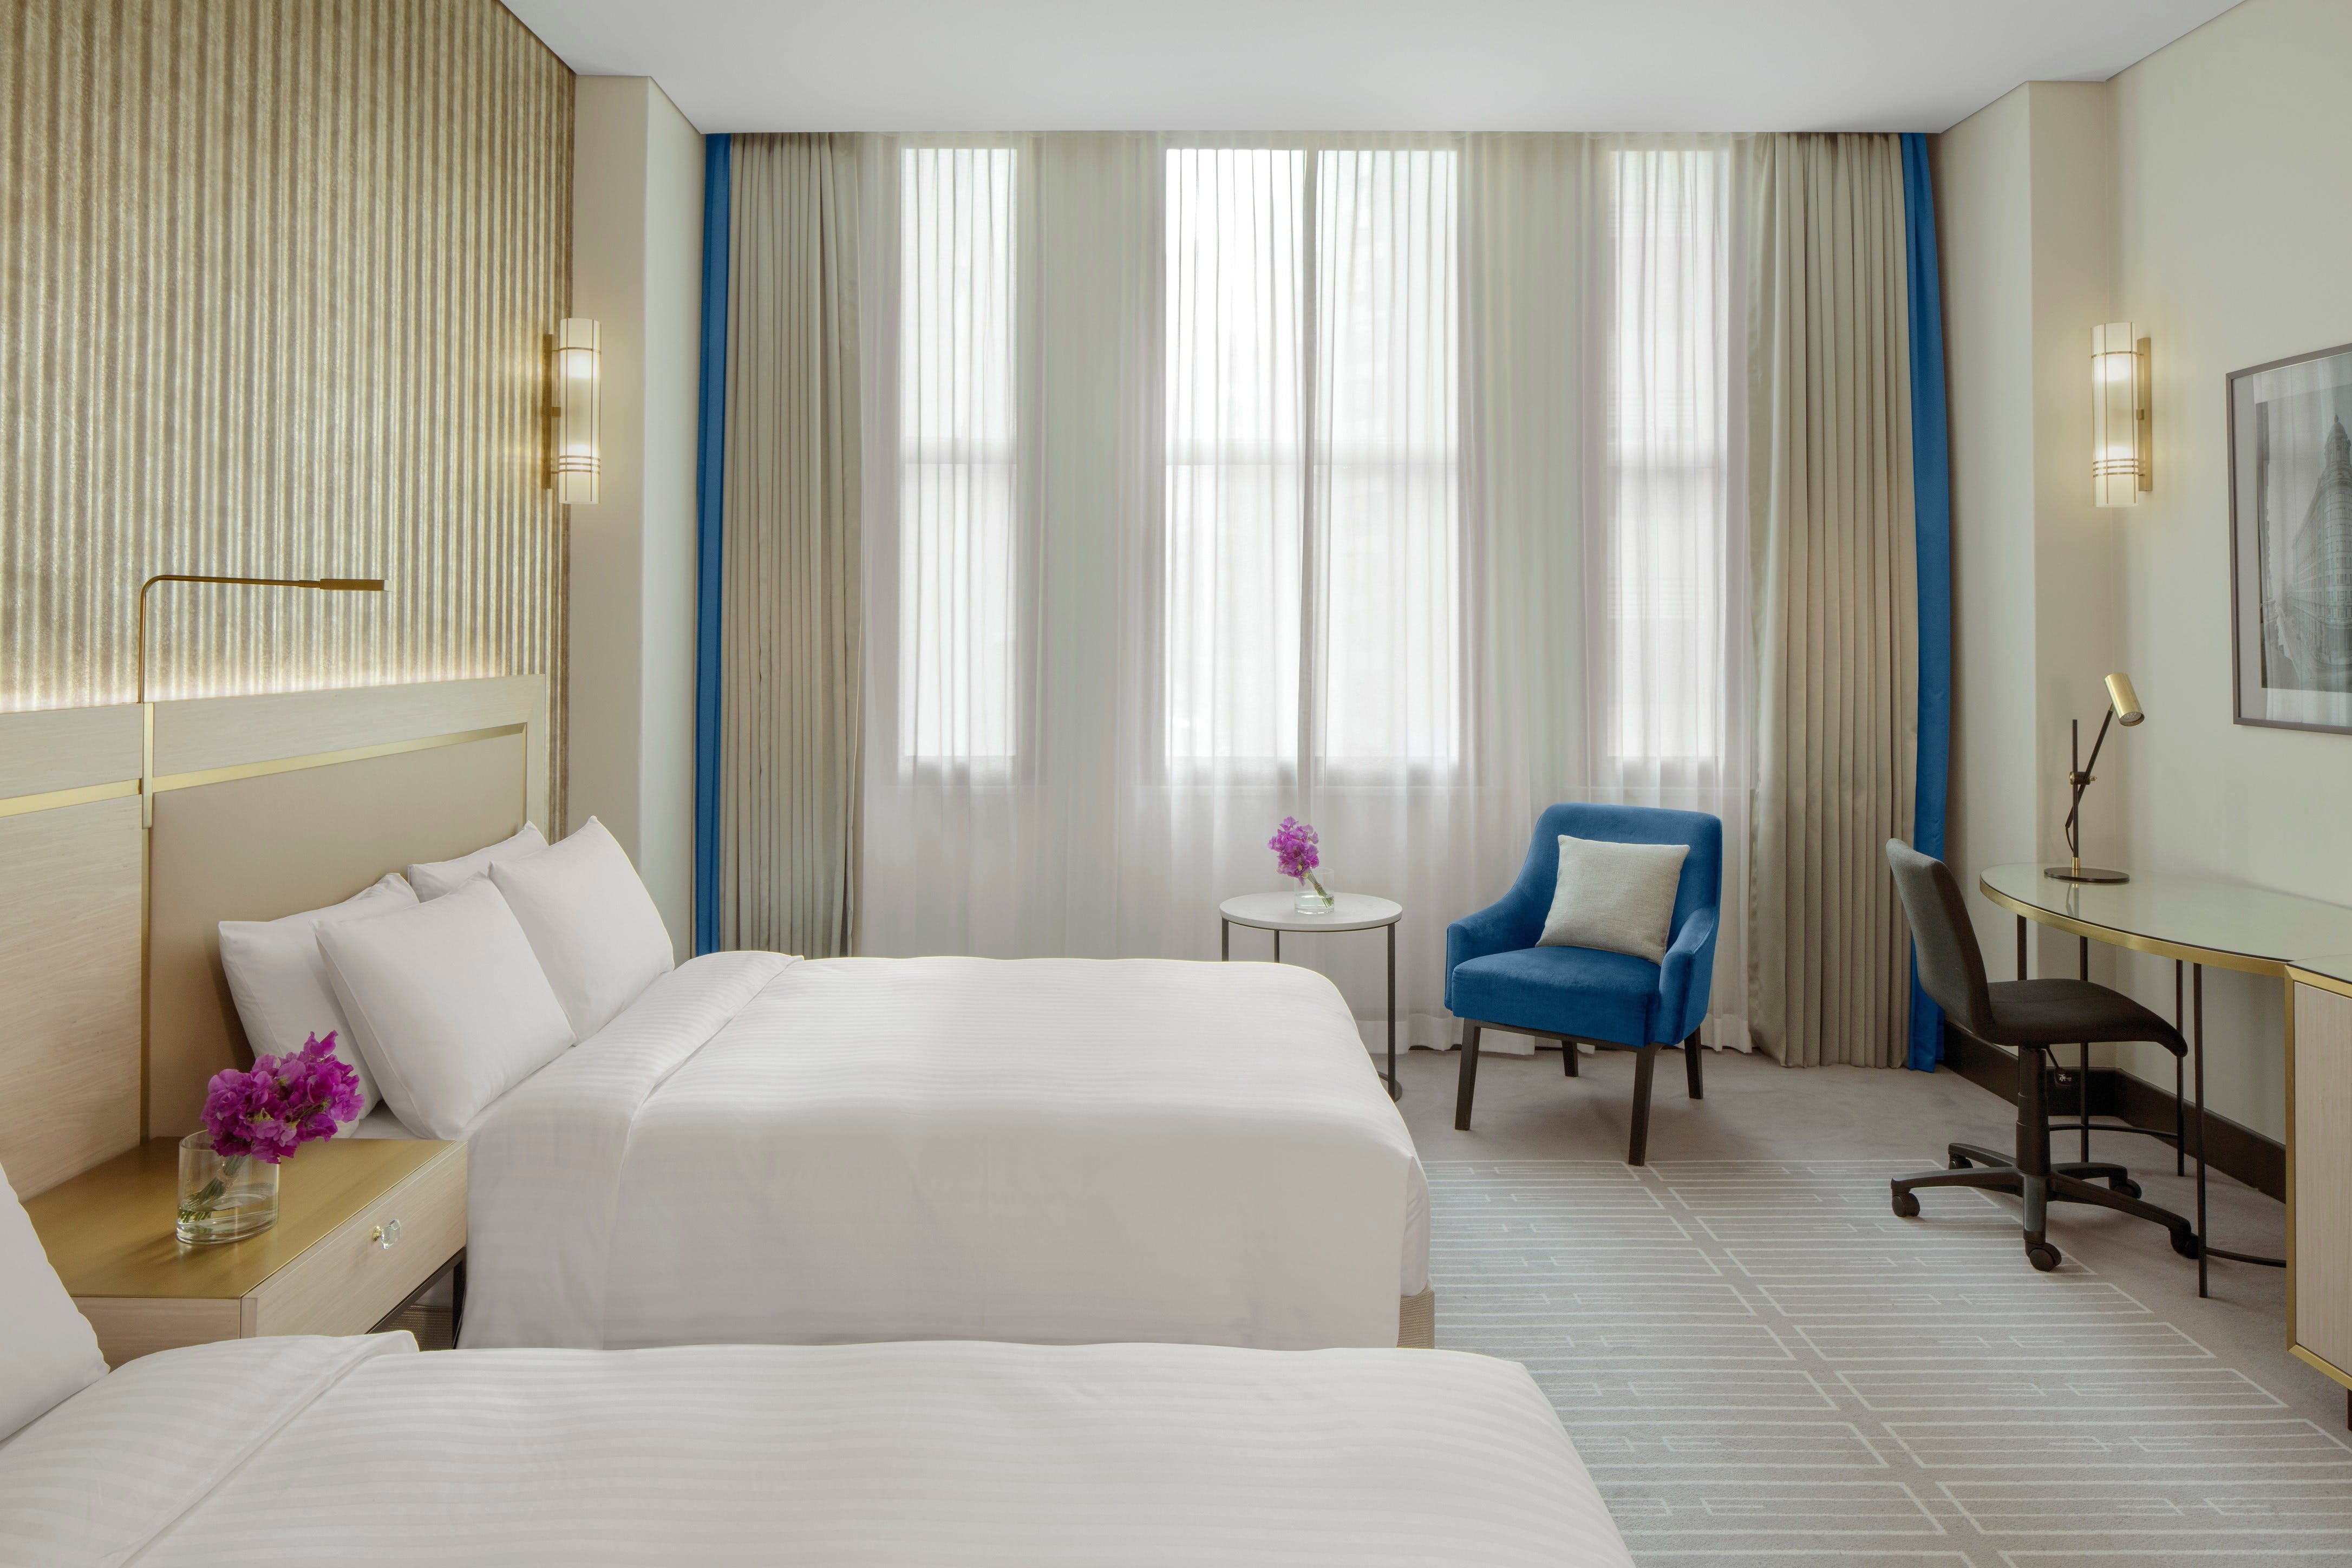 Radisson Blu Plaza Hotel Sydney - Accommodation Bookings 2